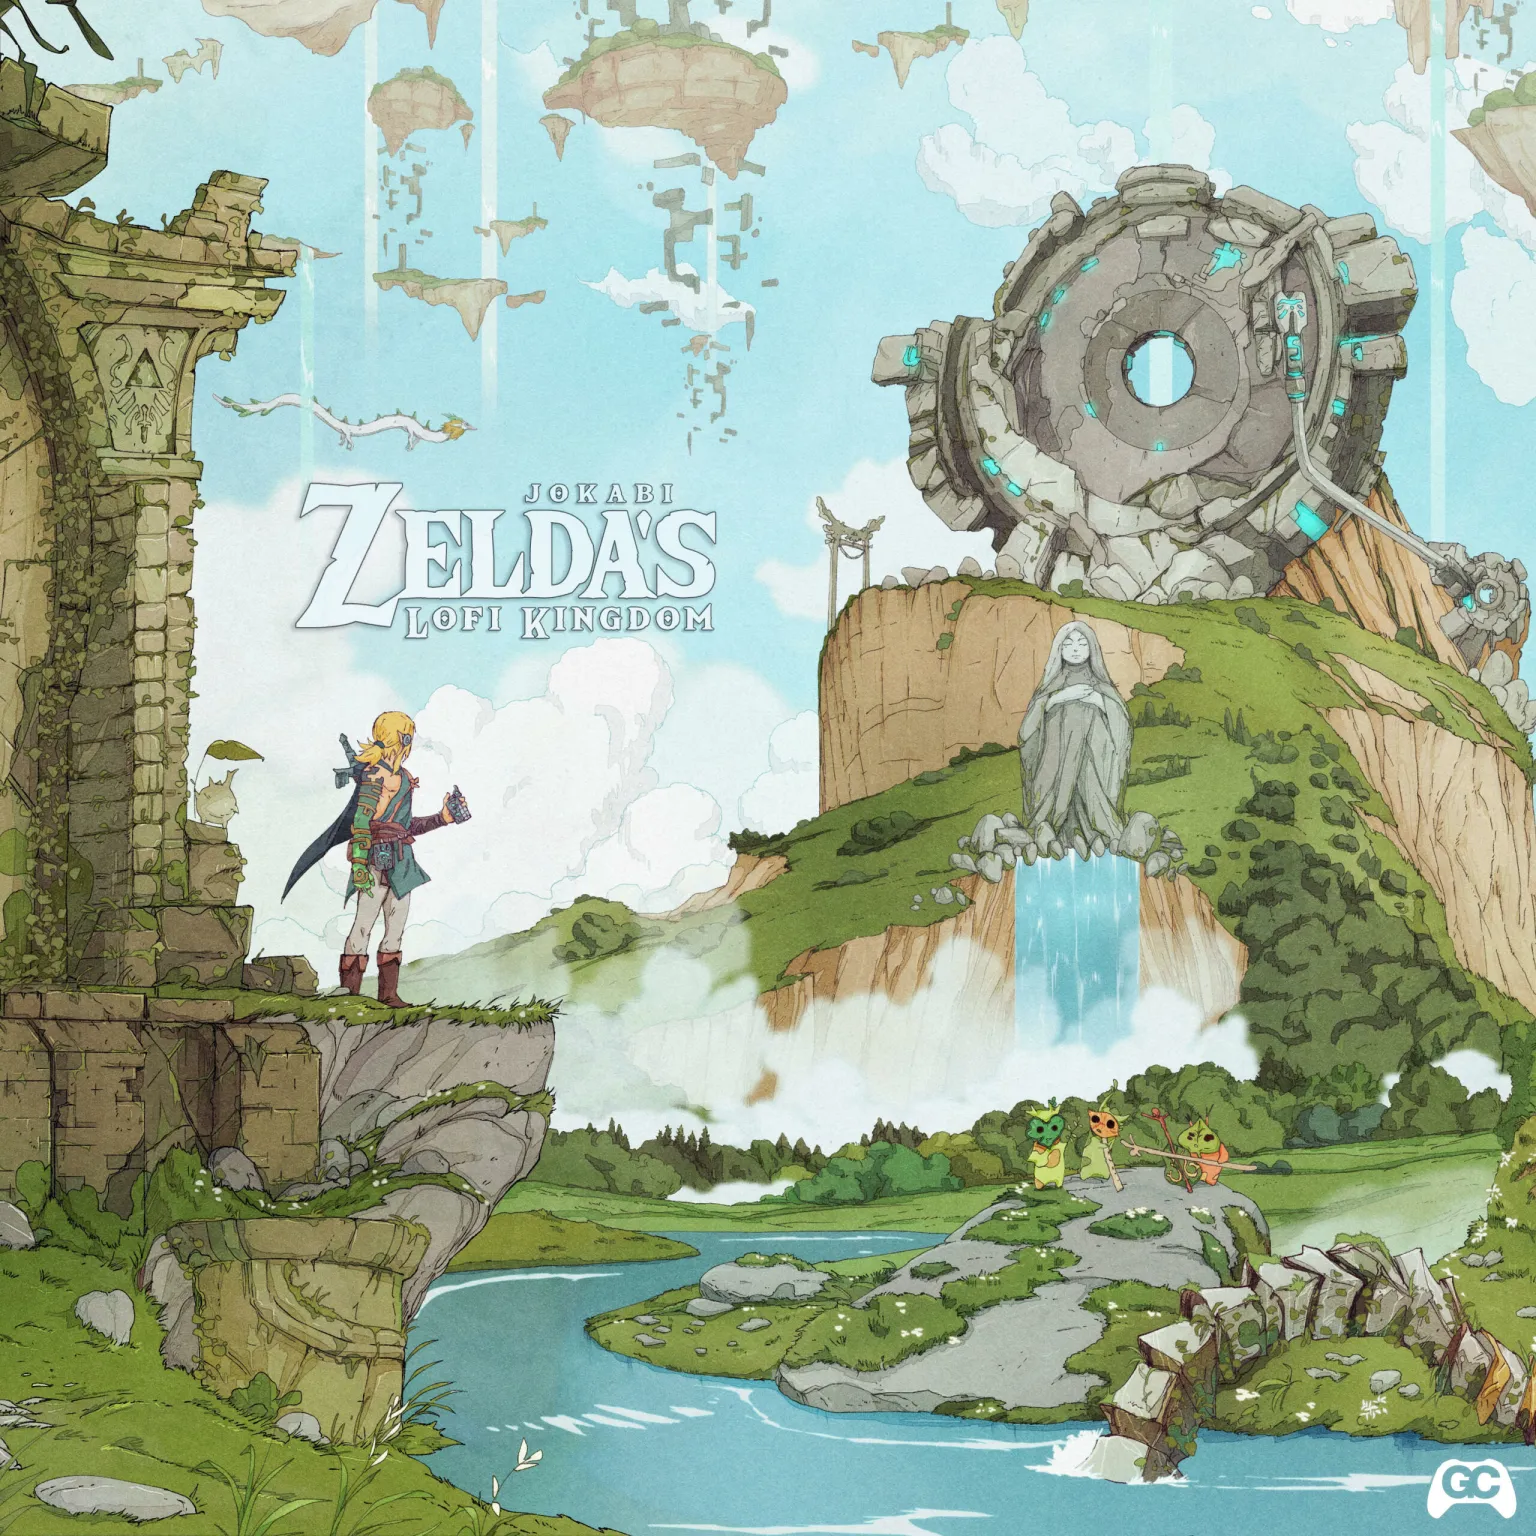 Zelda’s Lofi Kingdom